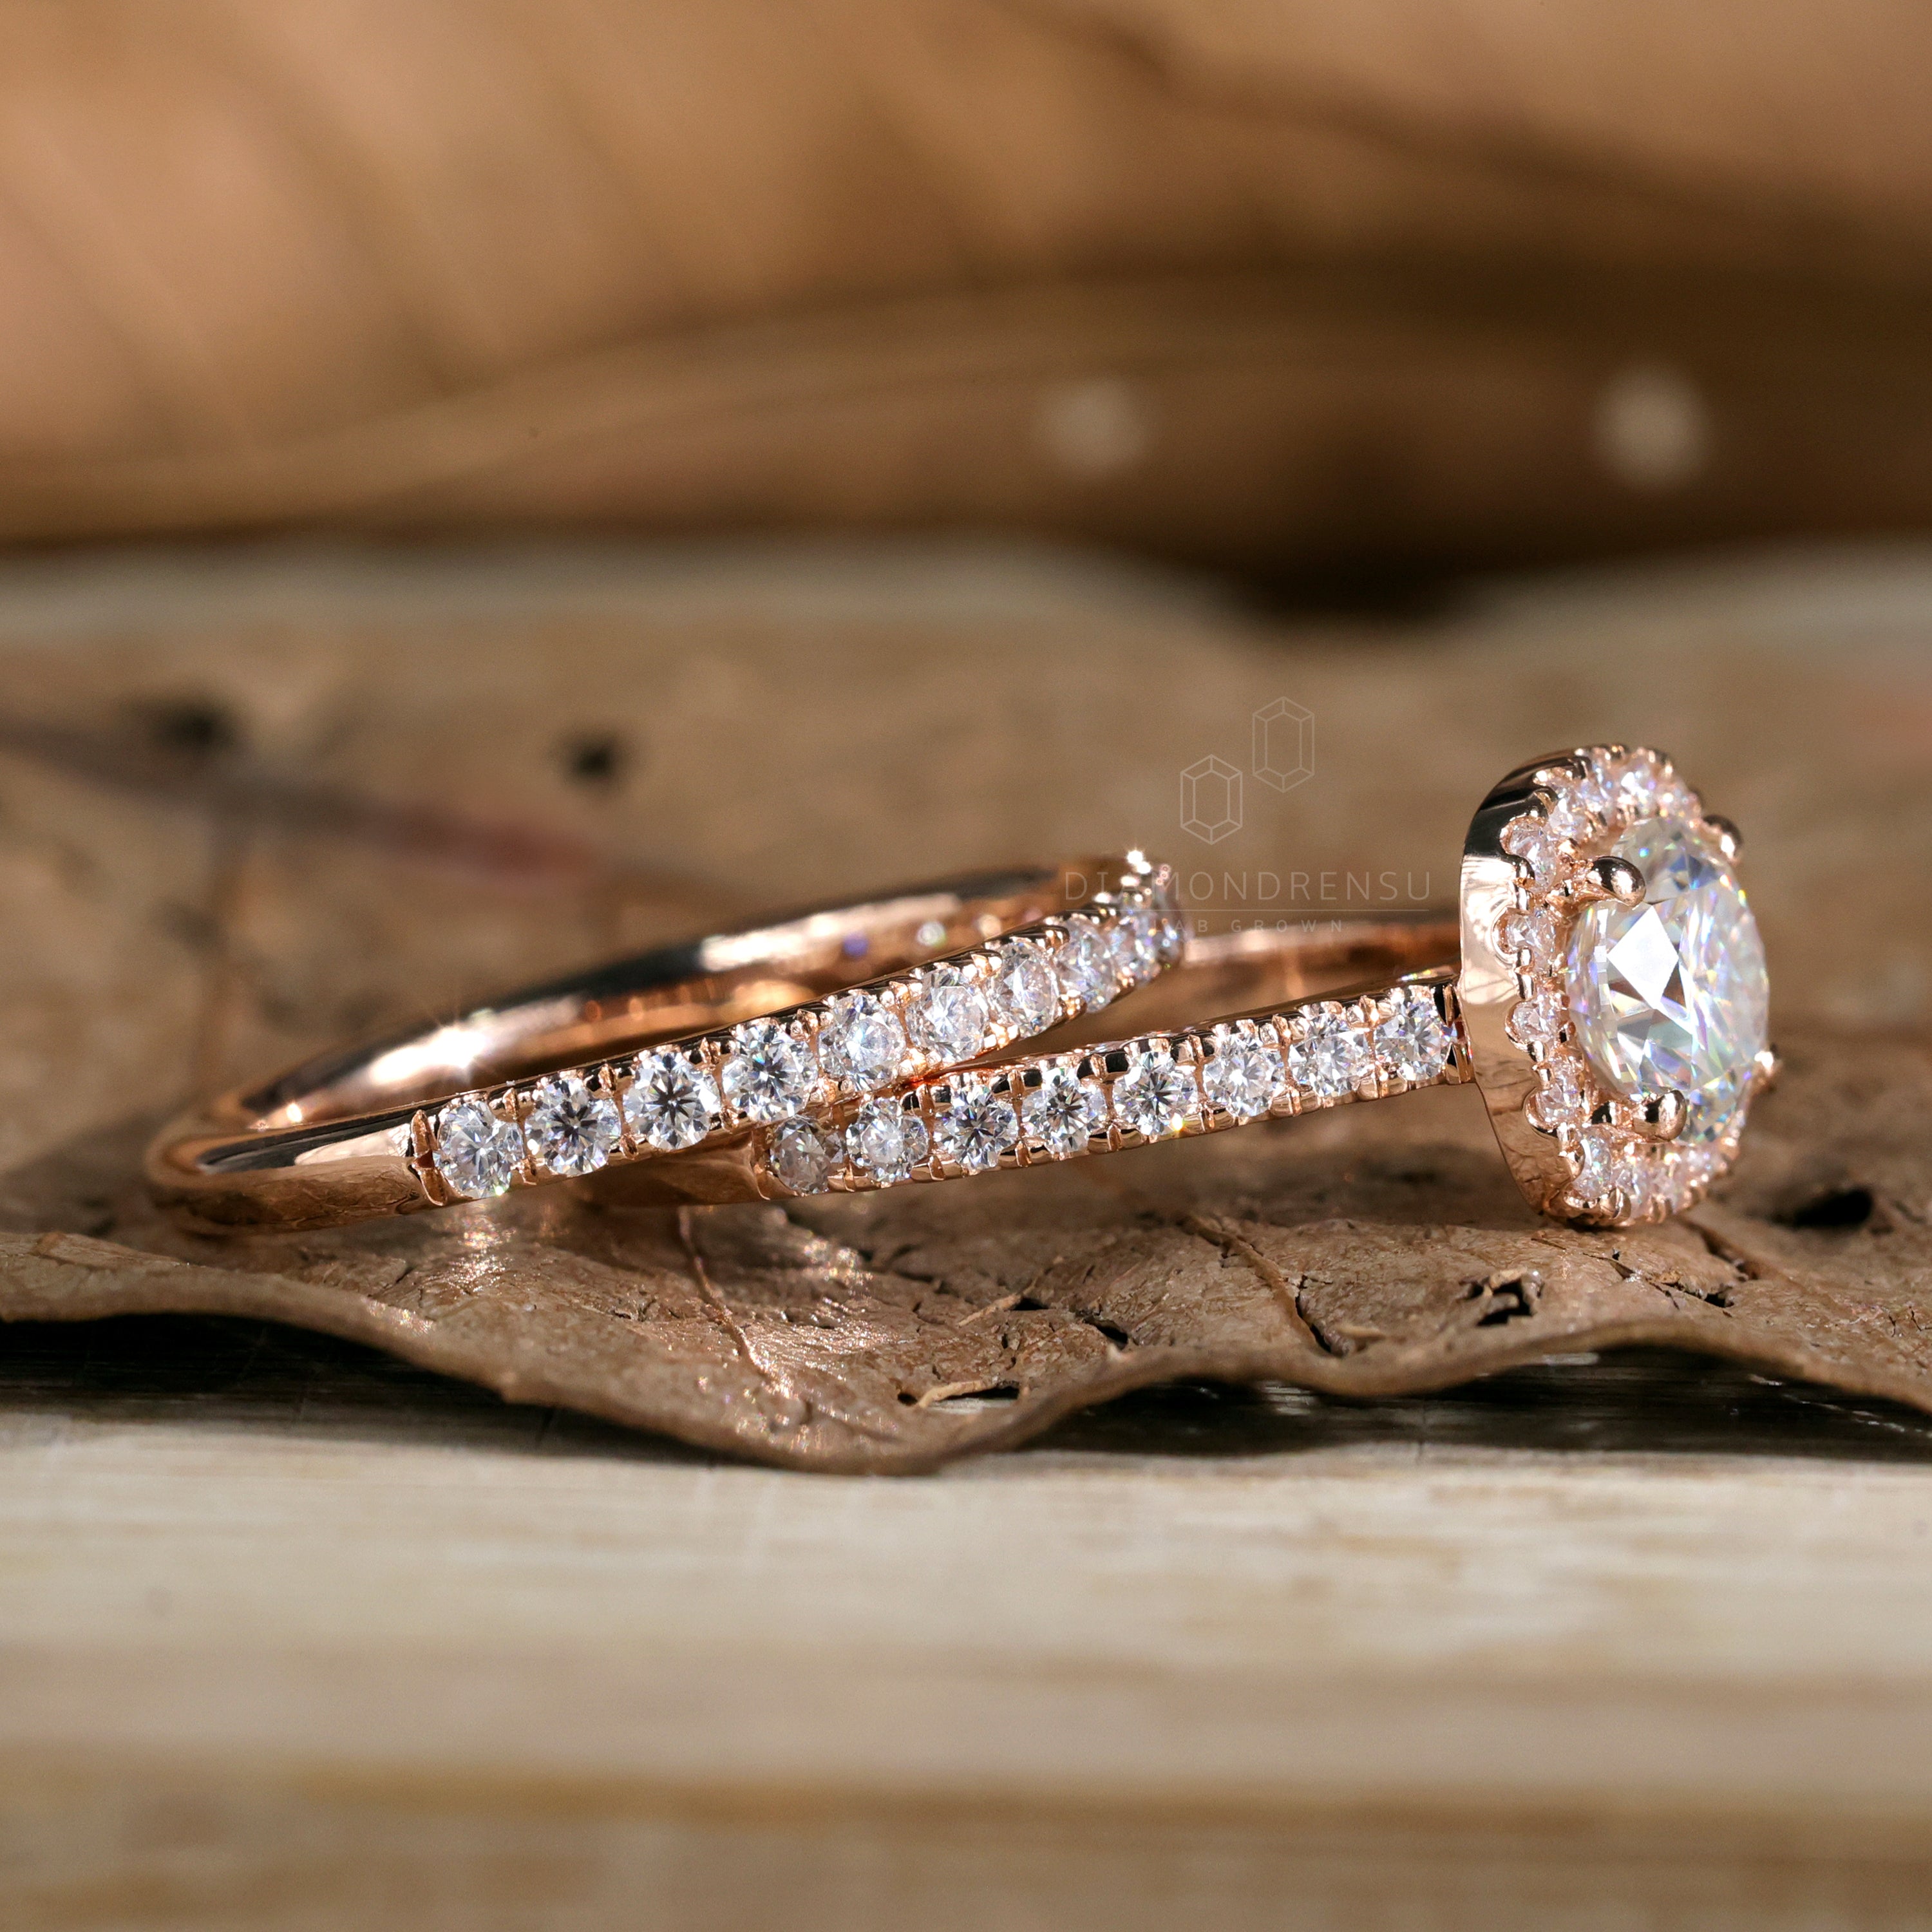 diamond engagement ring - diamondrensu